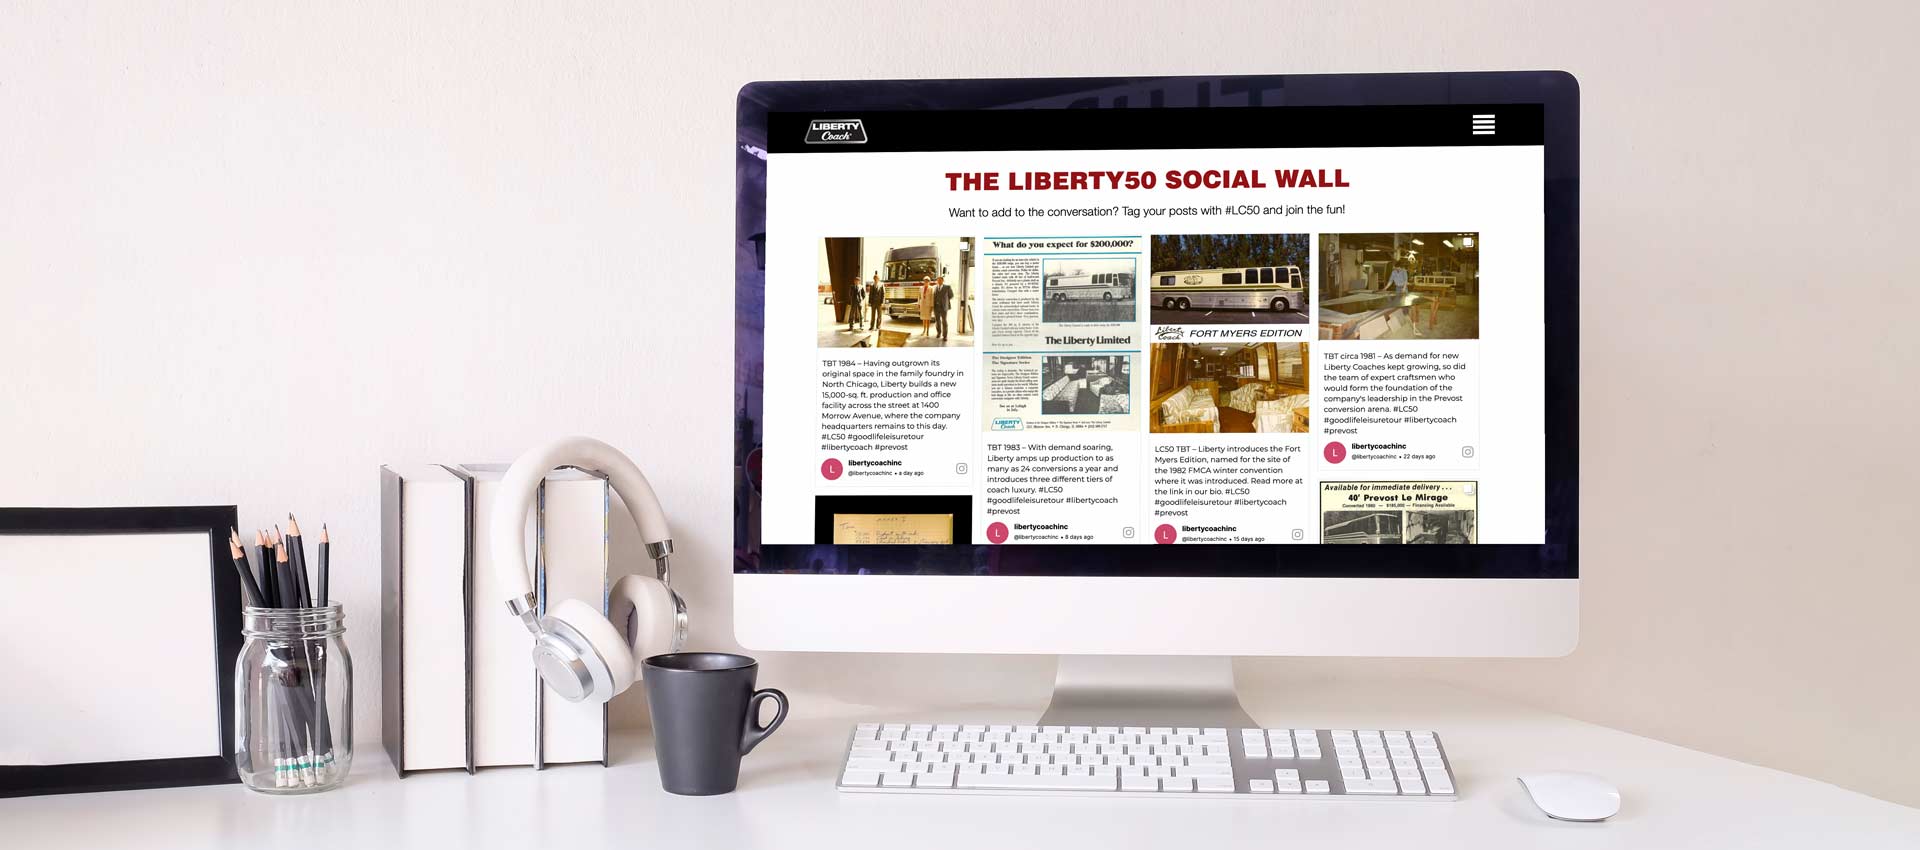 Front view of computer displaying Liberty social wall